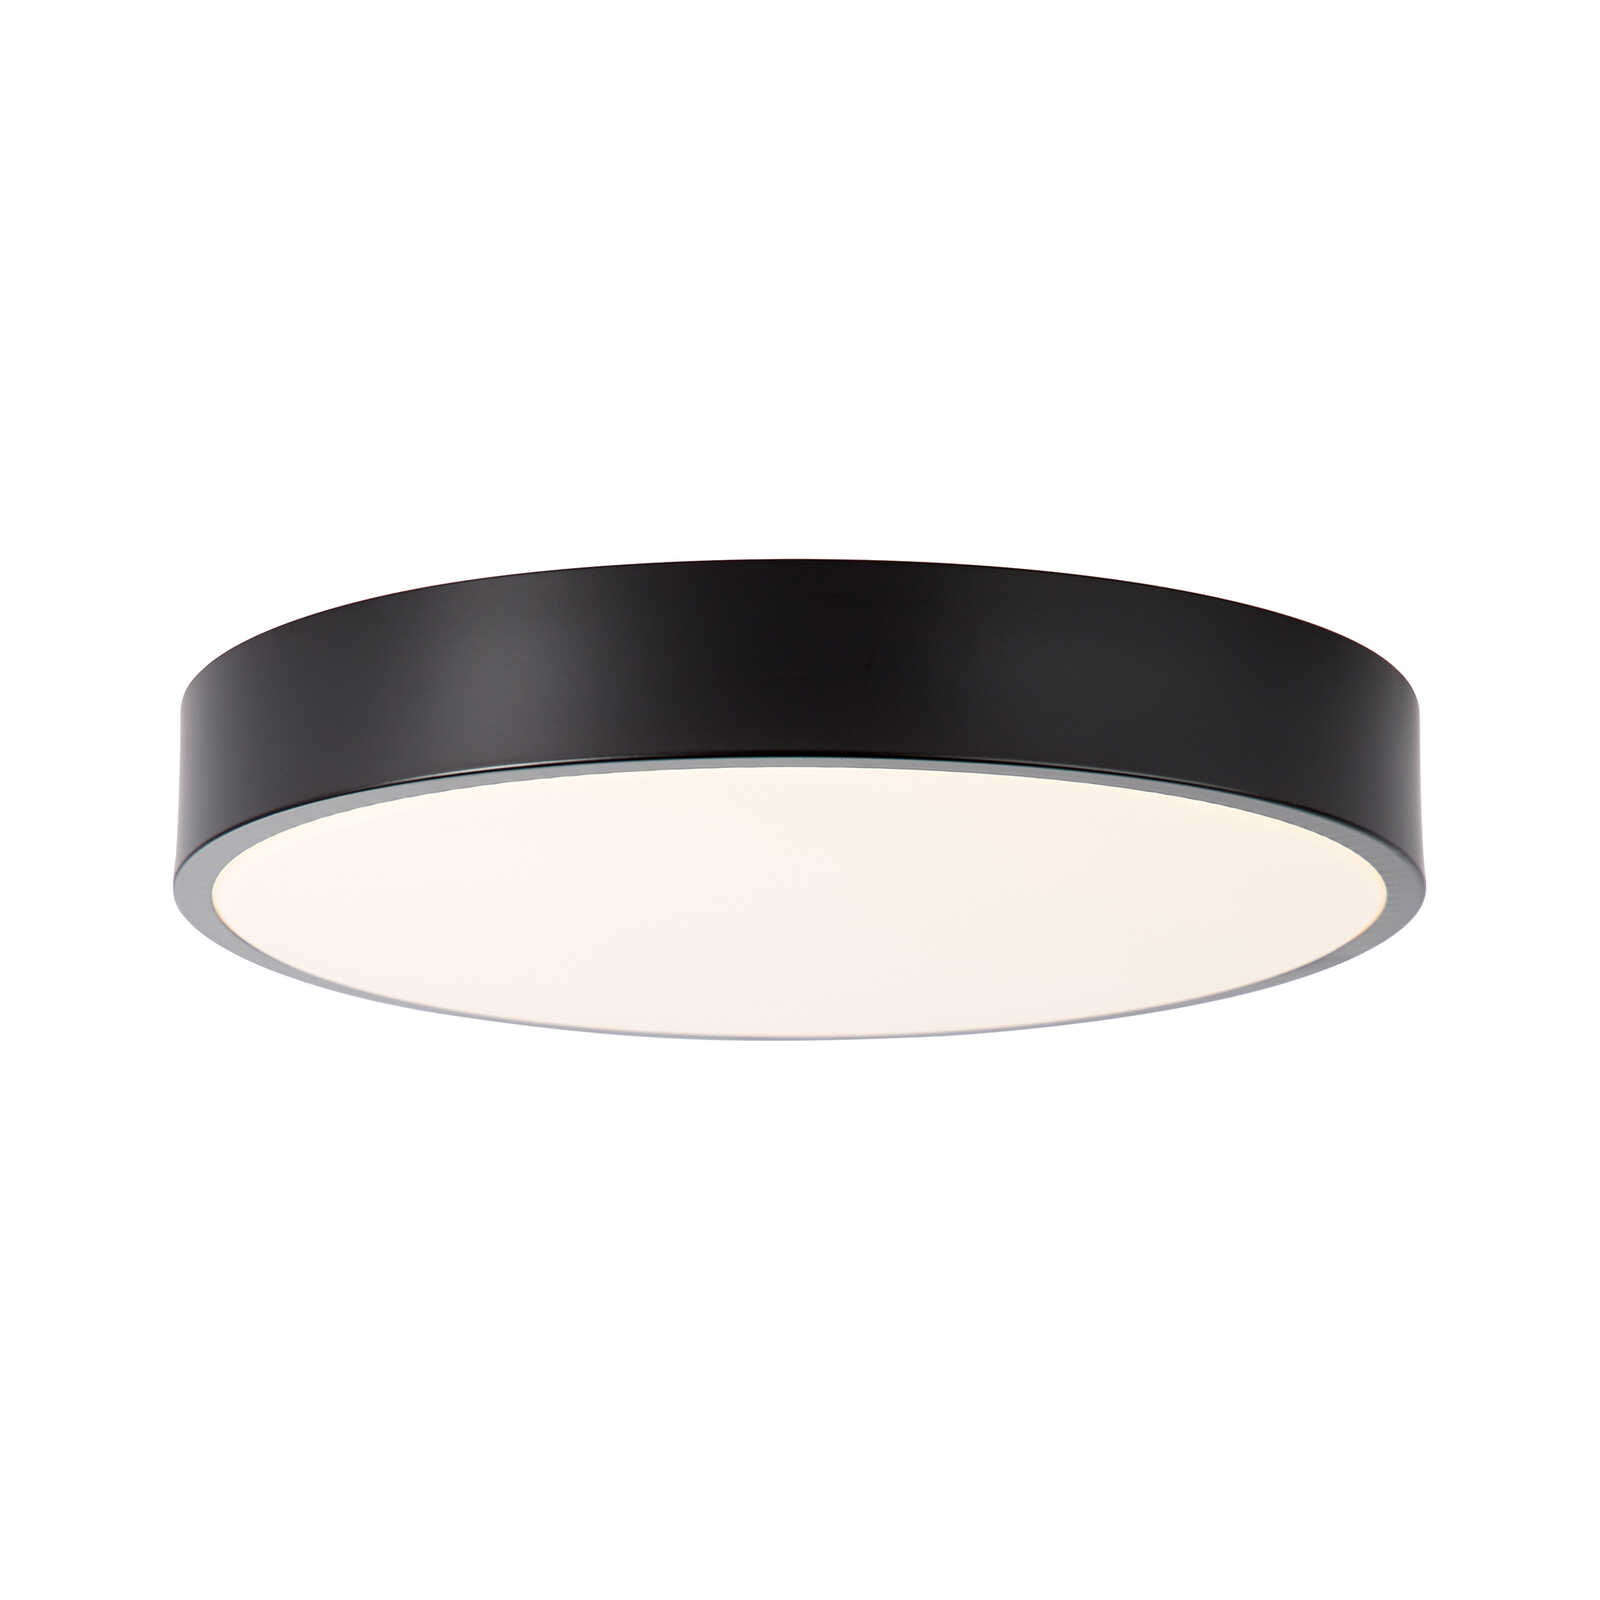 Plastic ceiling light - Niklas 5 - Black
